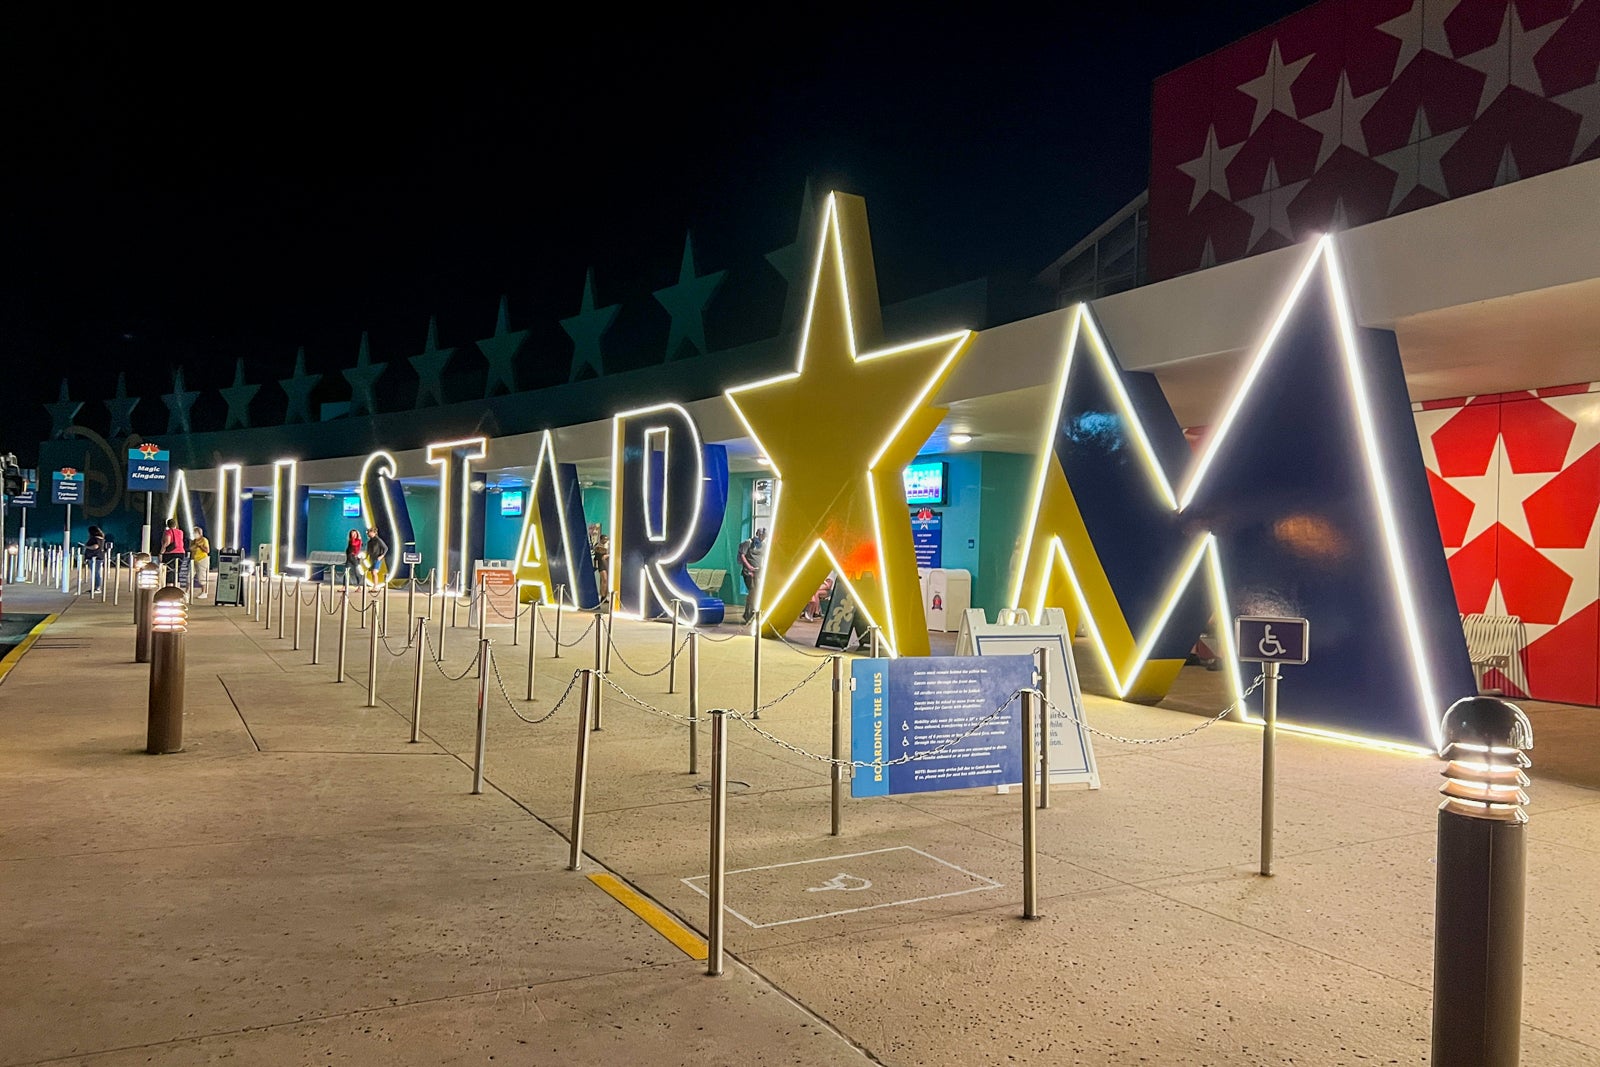 Large illuminated sign outside Disney's All-Star Music Resort